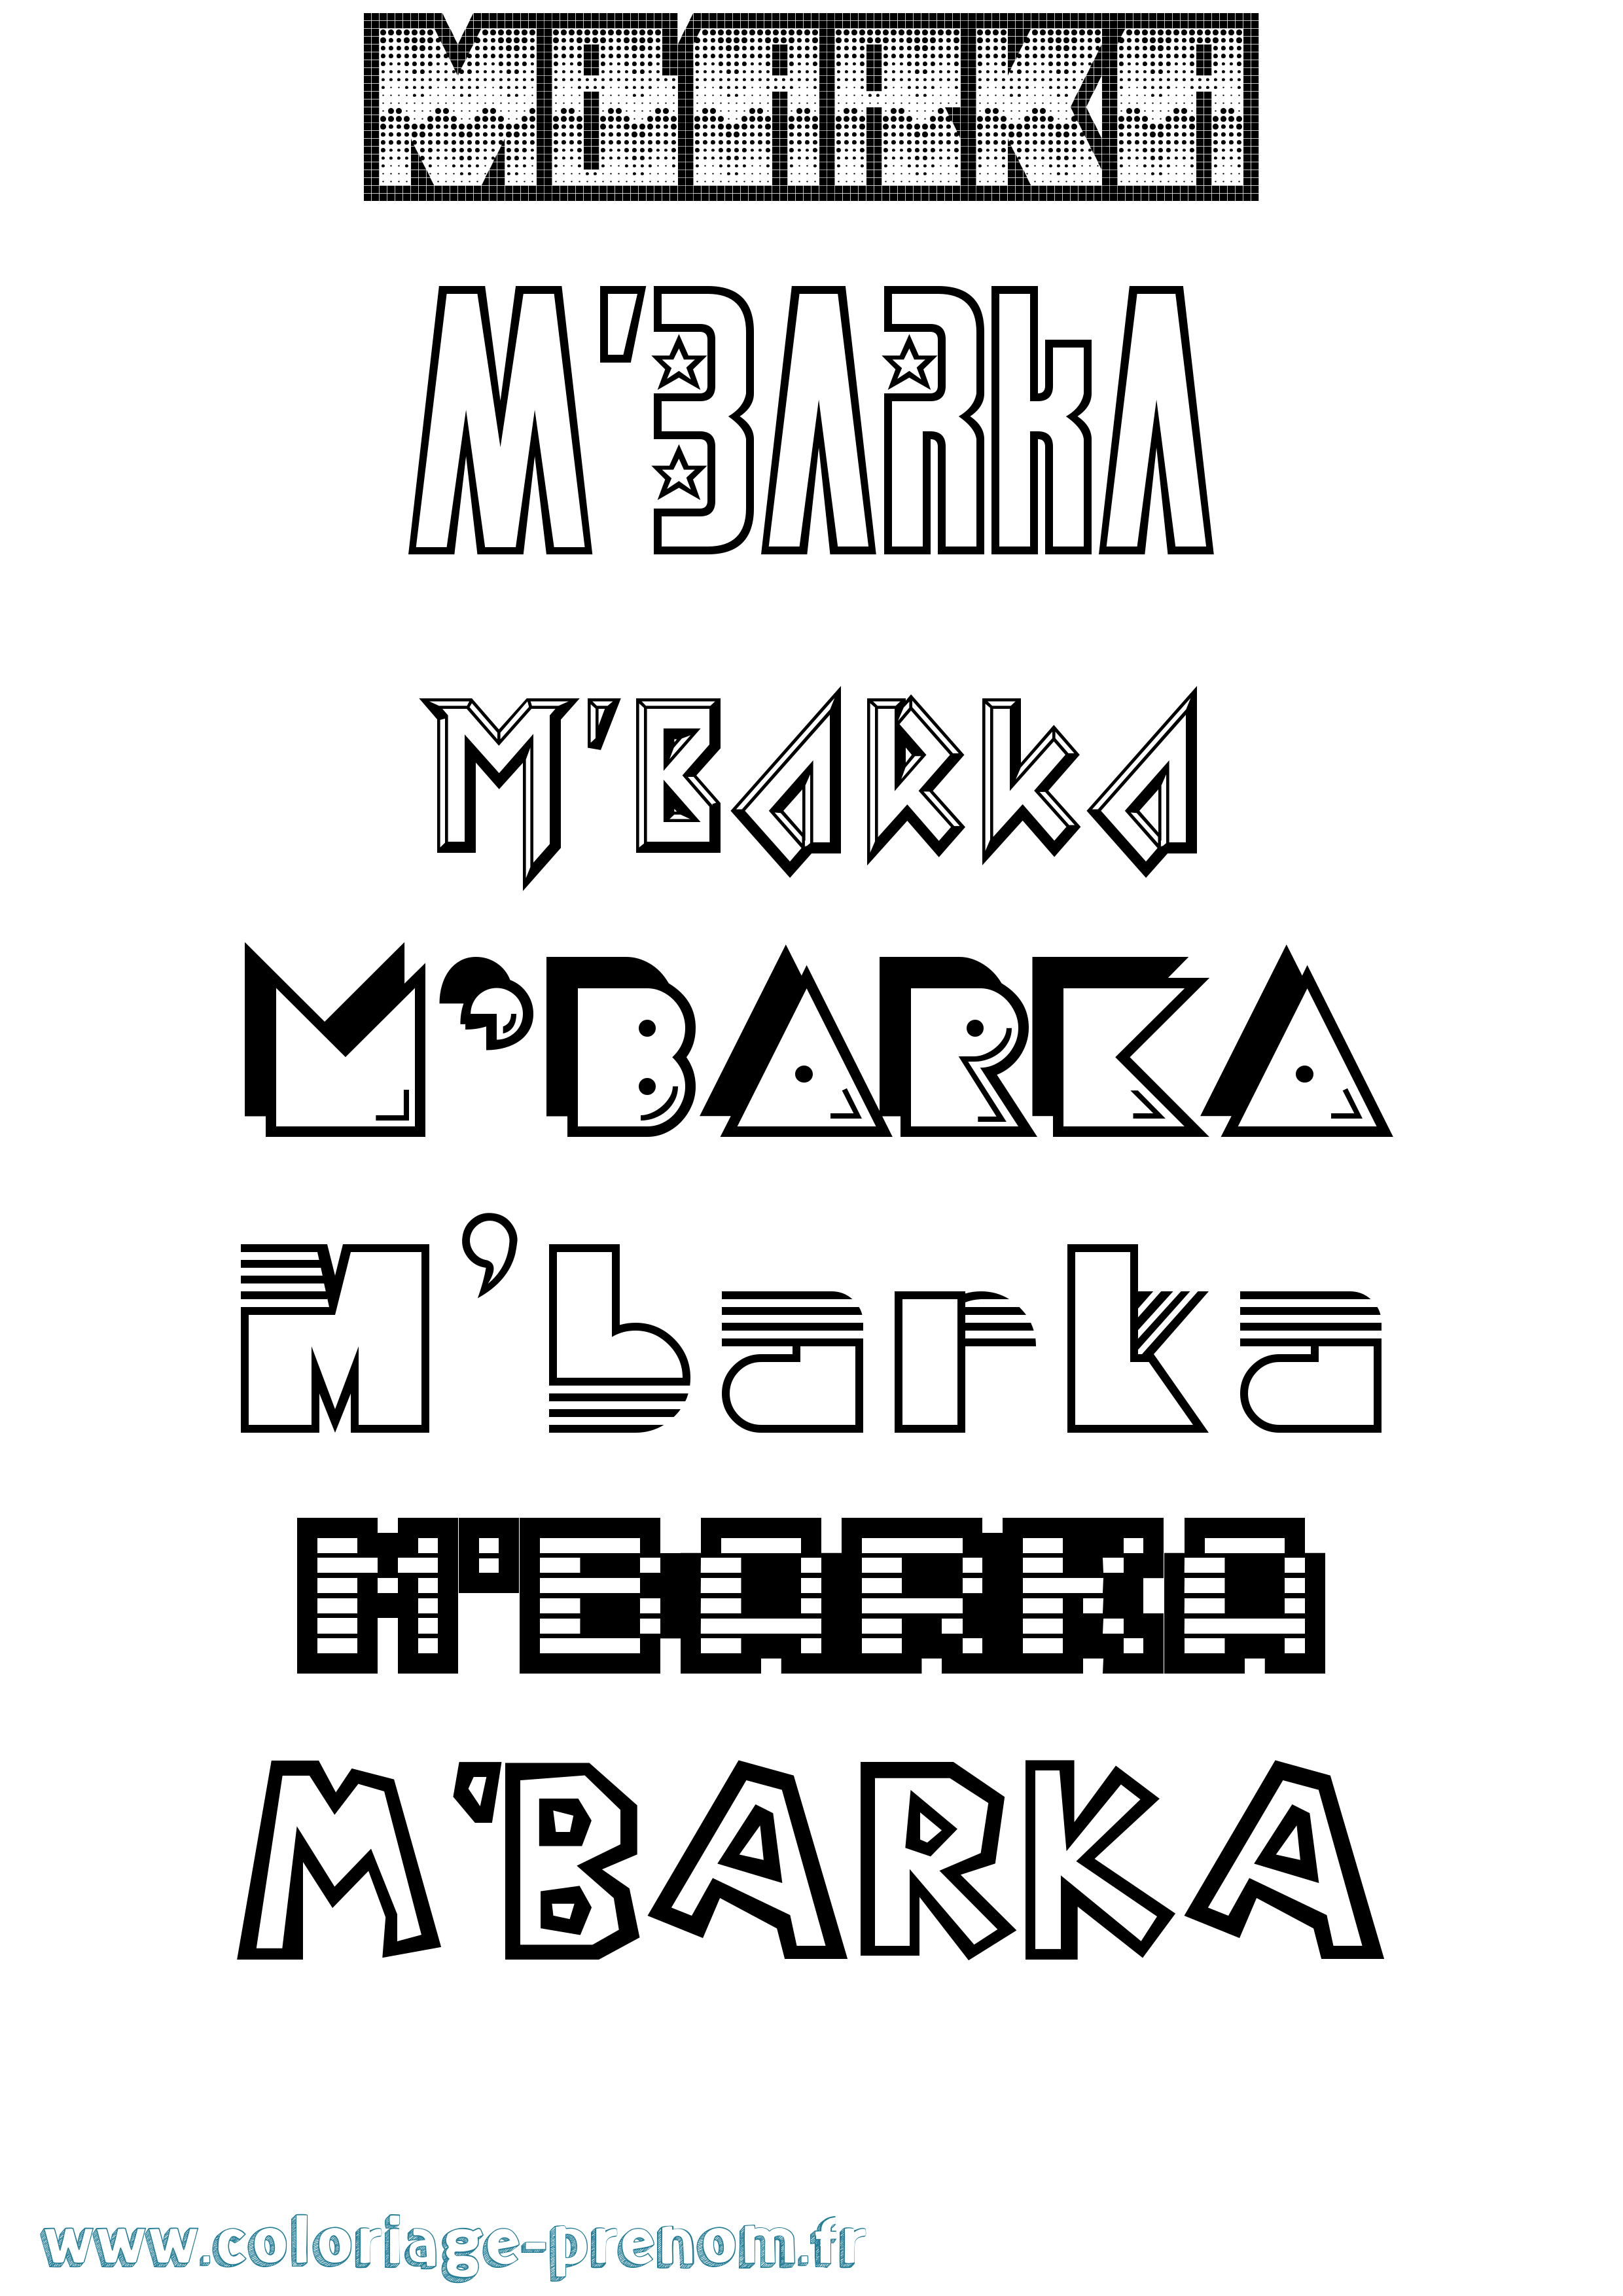 Coloriage prénom M'Barka Jeux Vidéos